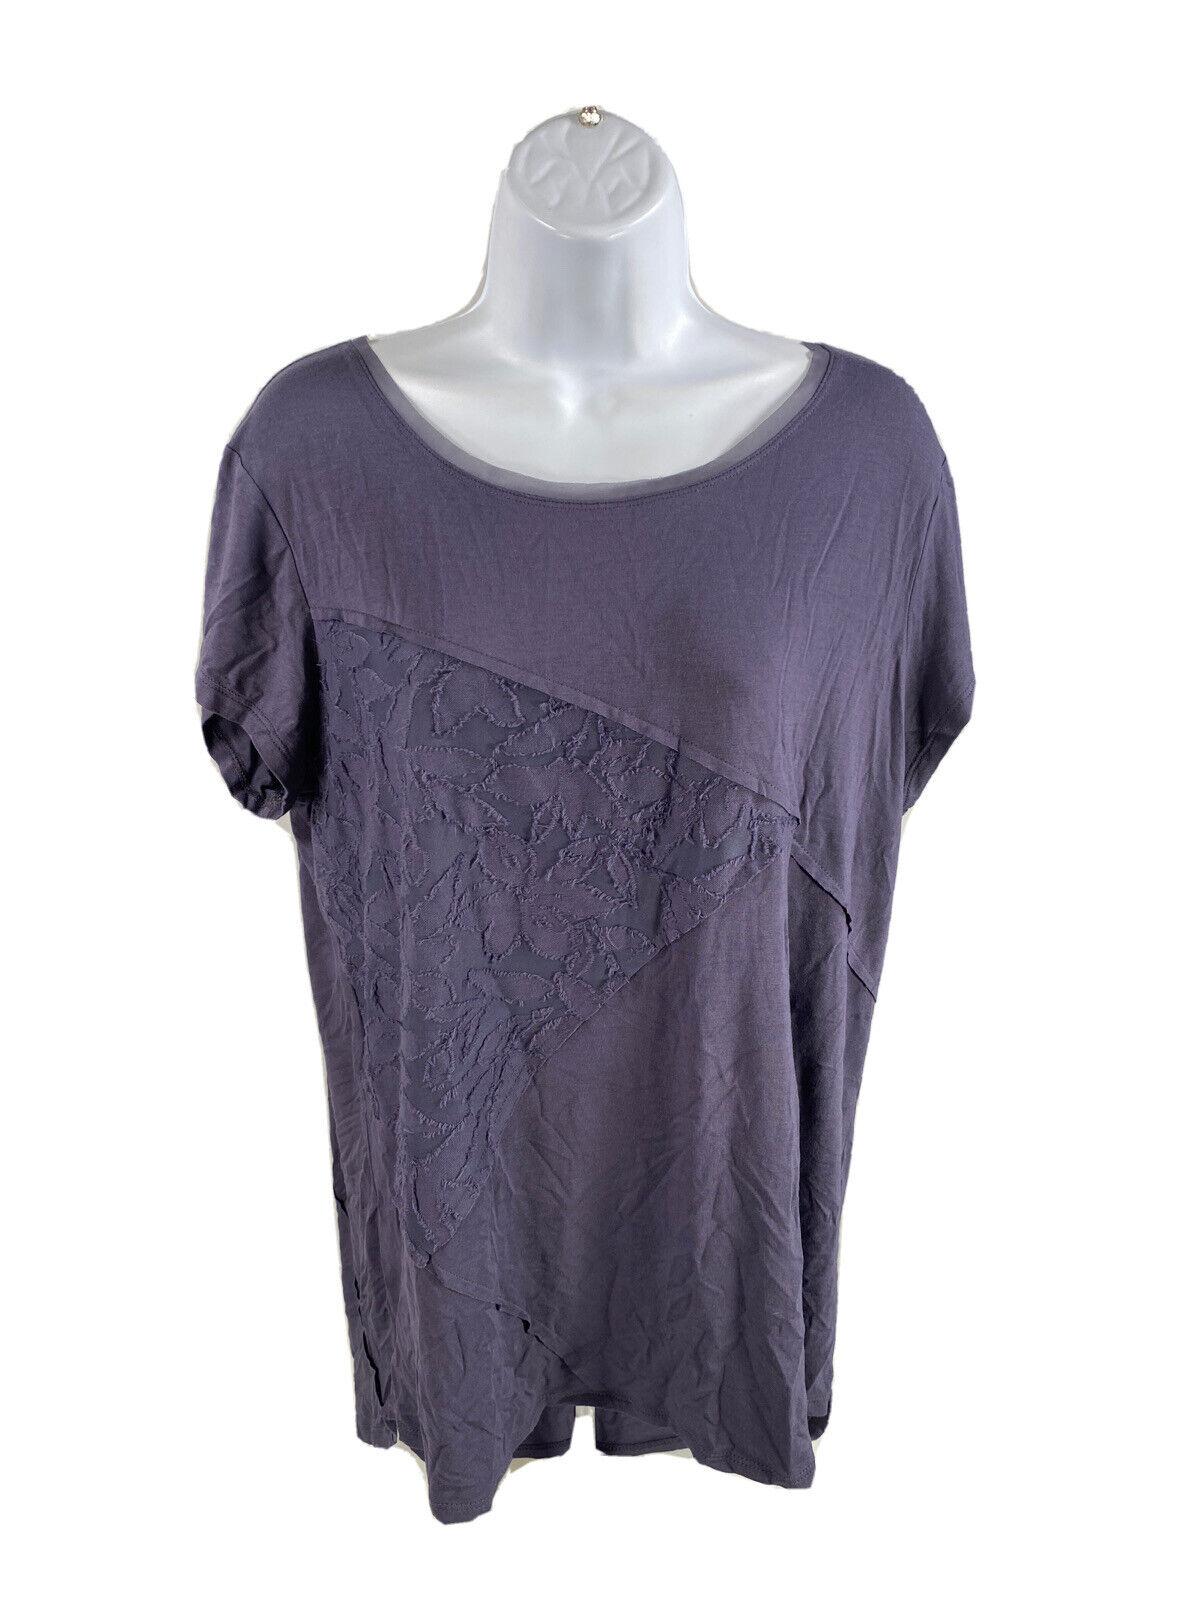 NEW Simply Vera Wang Women's Purple Short Sleeve T-Shirt - L